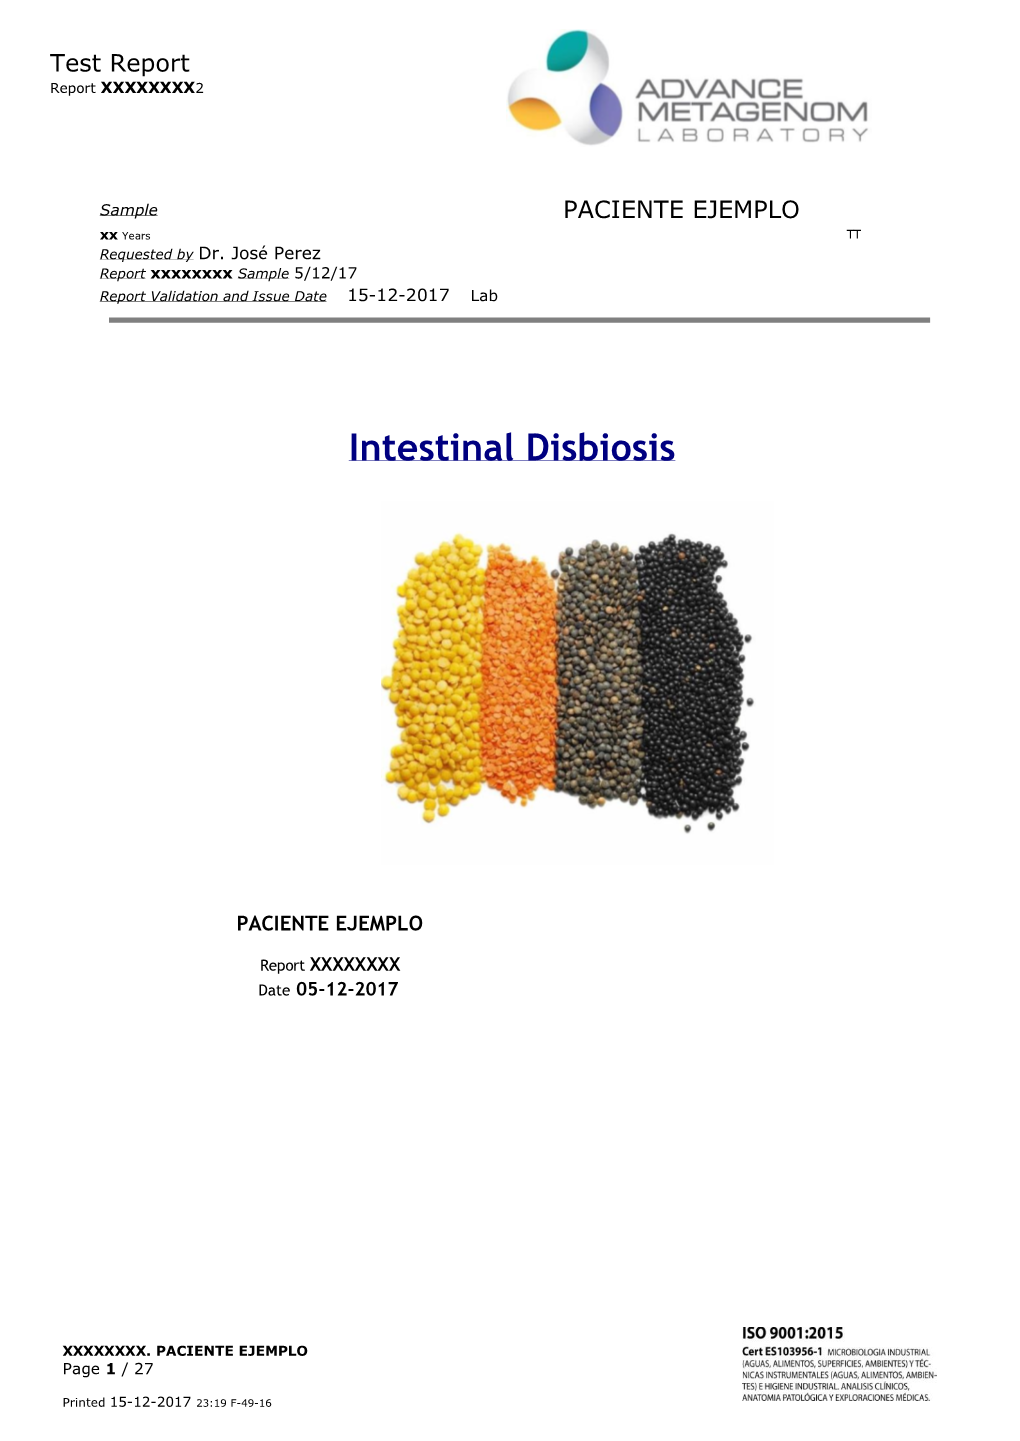 Intestinal Disbiosis